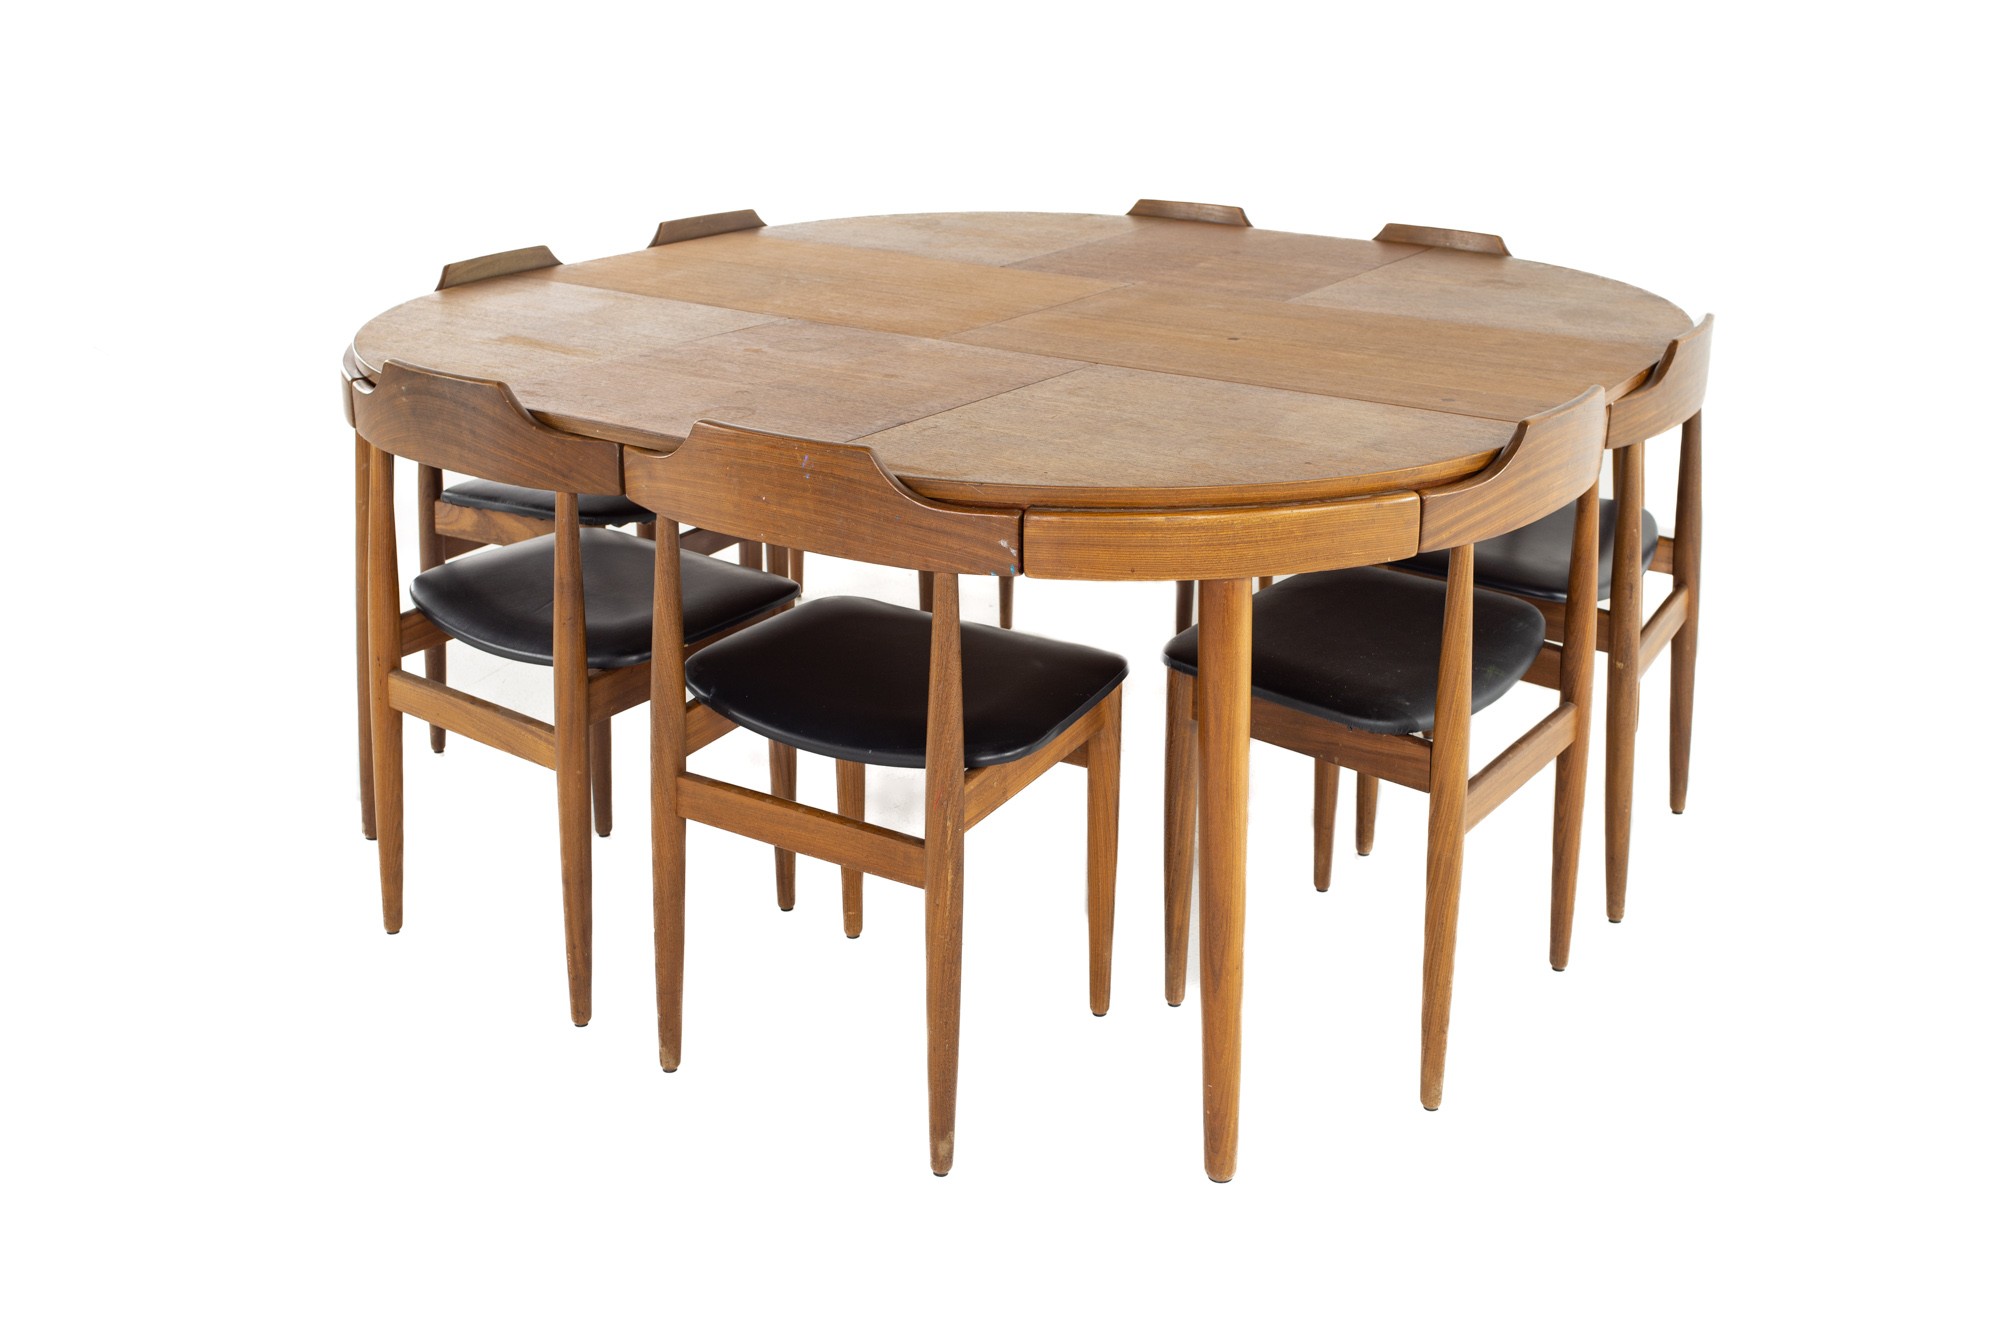 Hans Olsen for Frem Rojle Mid Century Teak Roundette Expanding Dining Table with Nesting Chairs - Set of 8